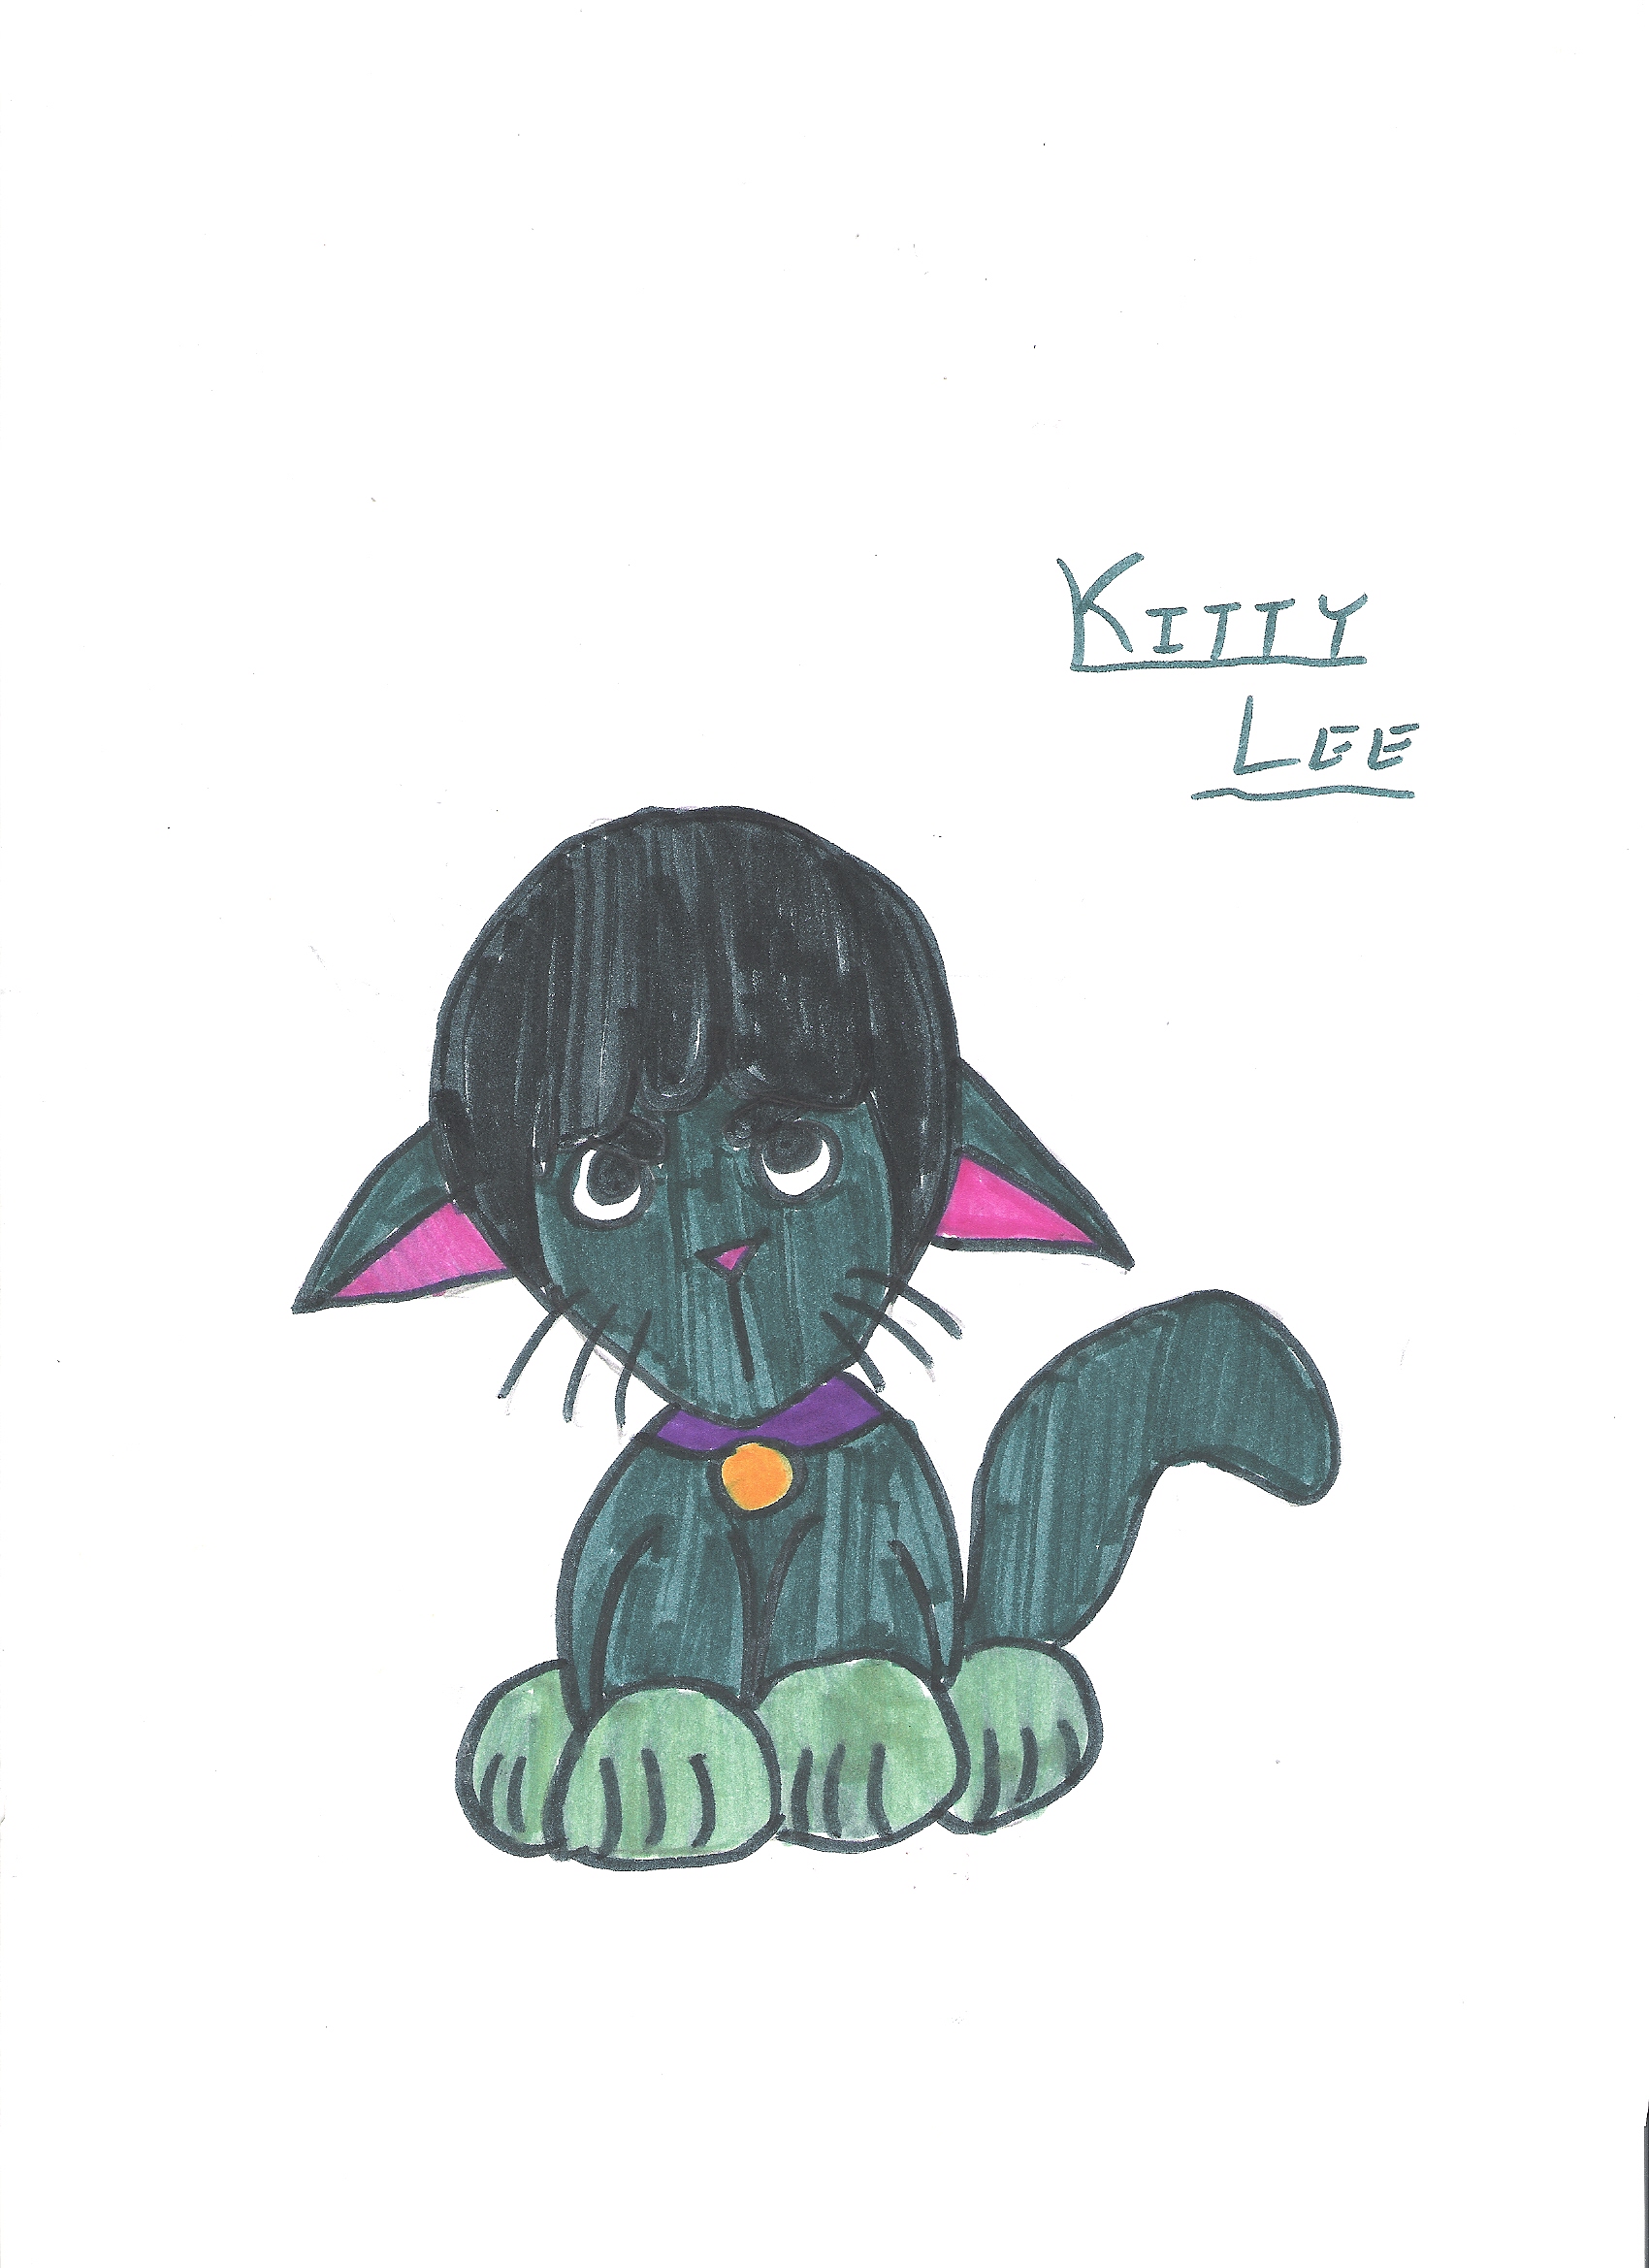 Kitty Lee by Arue